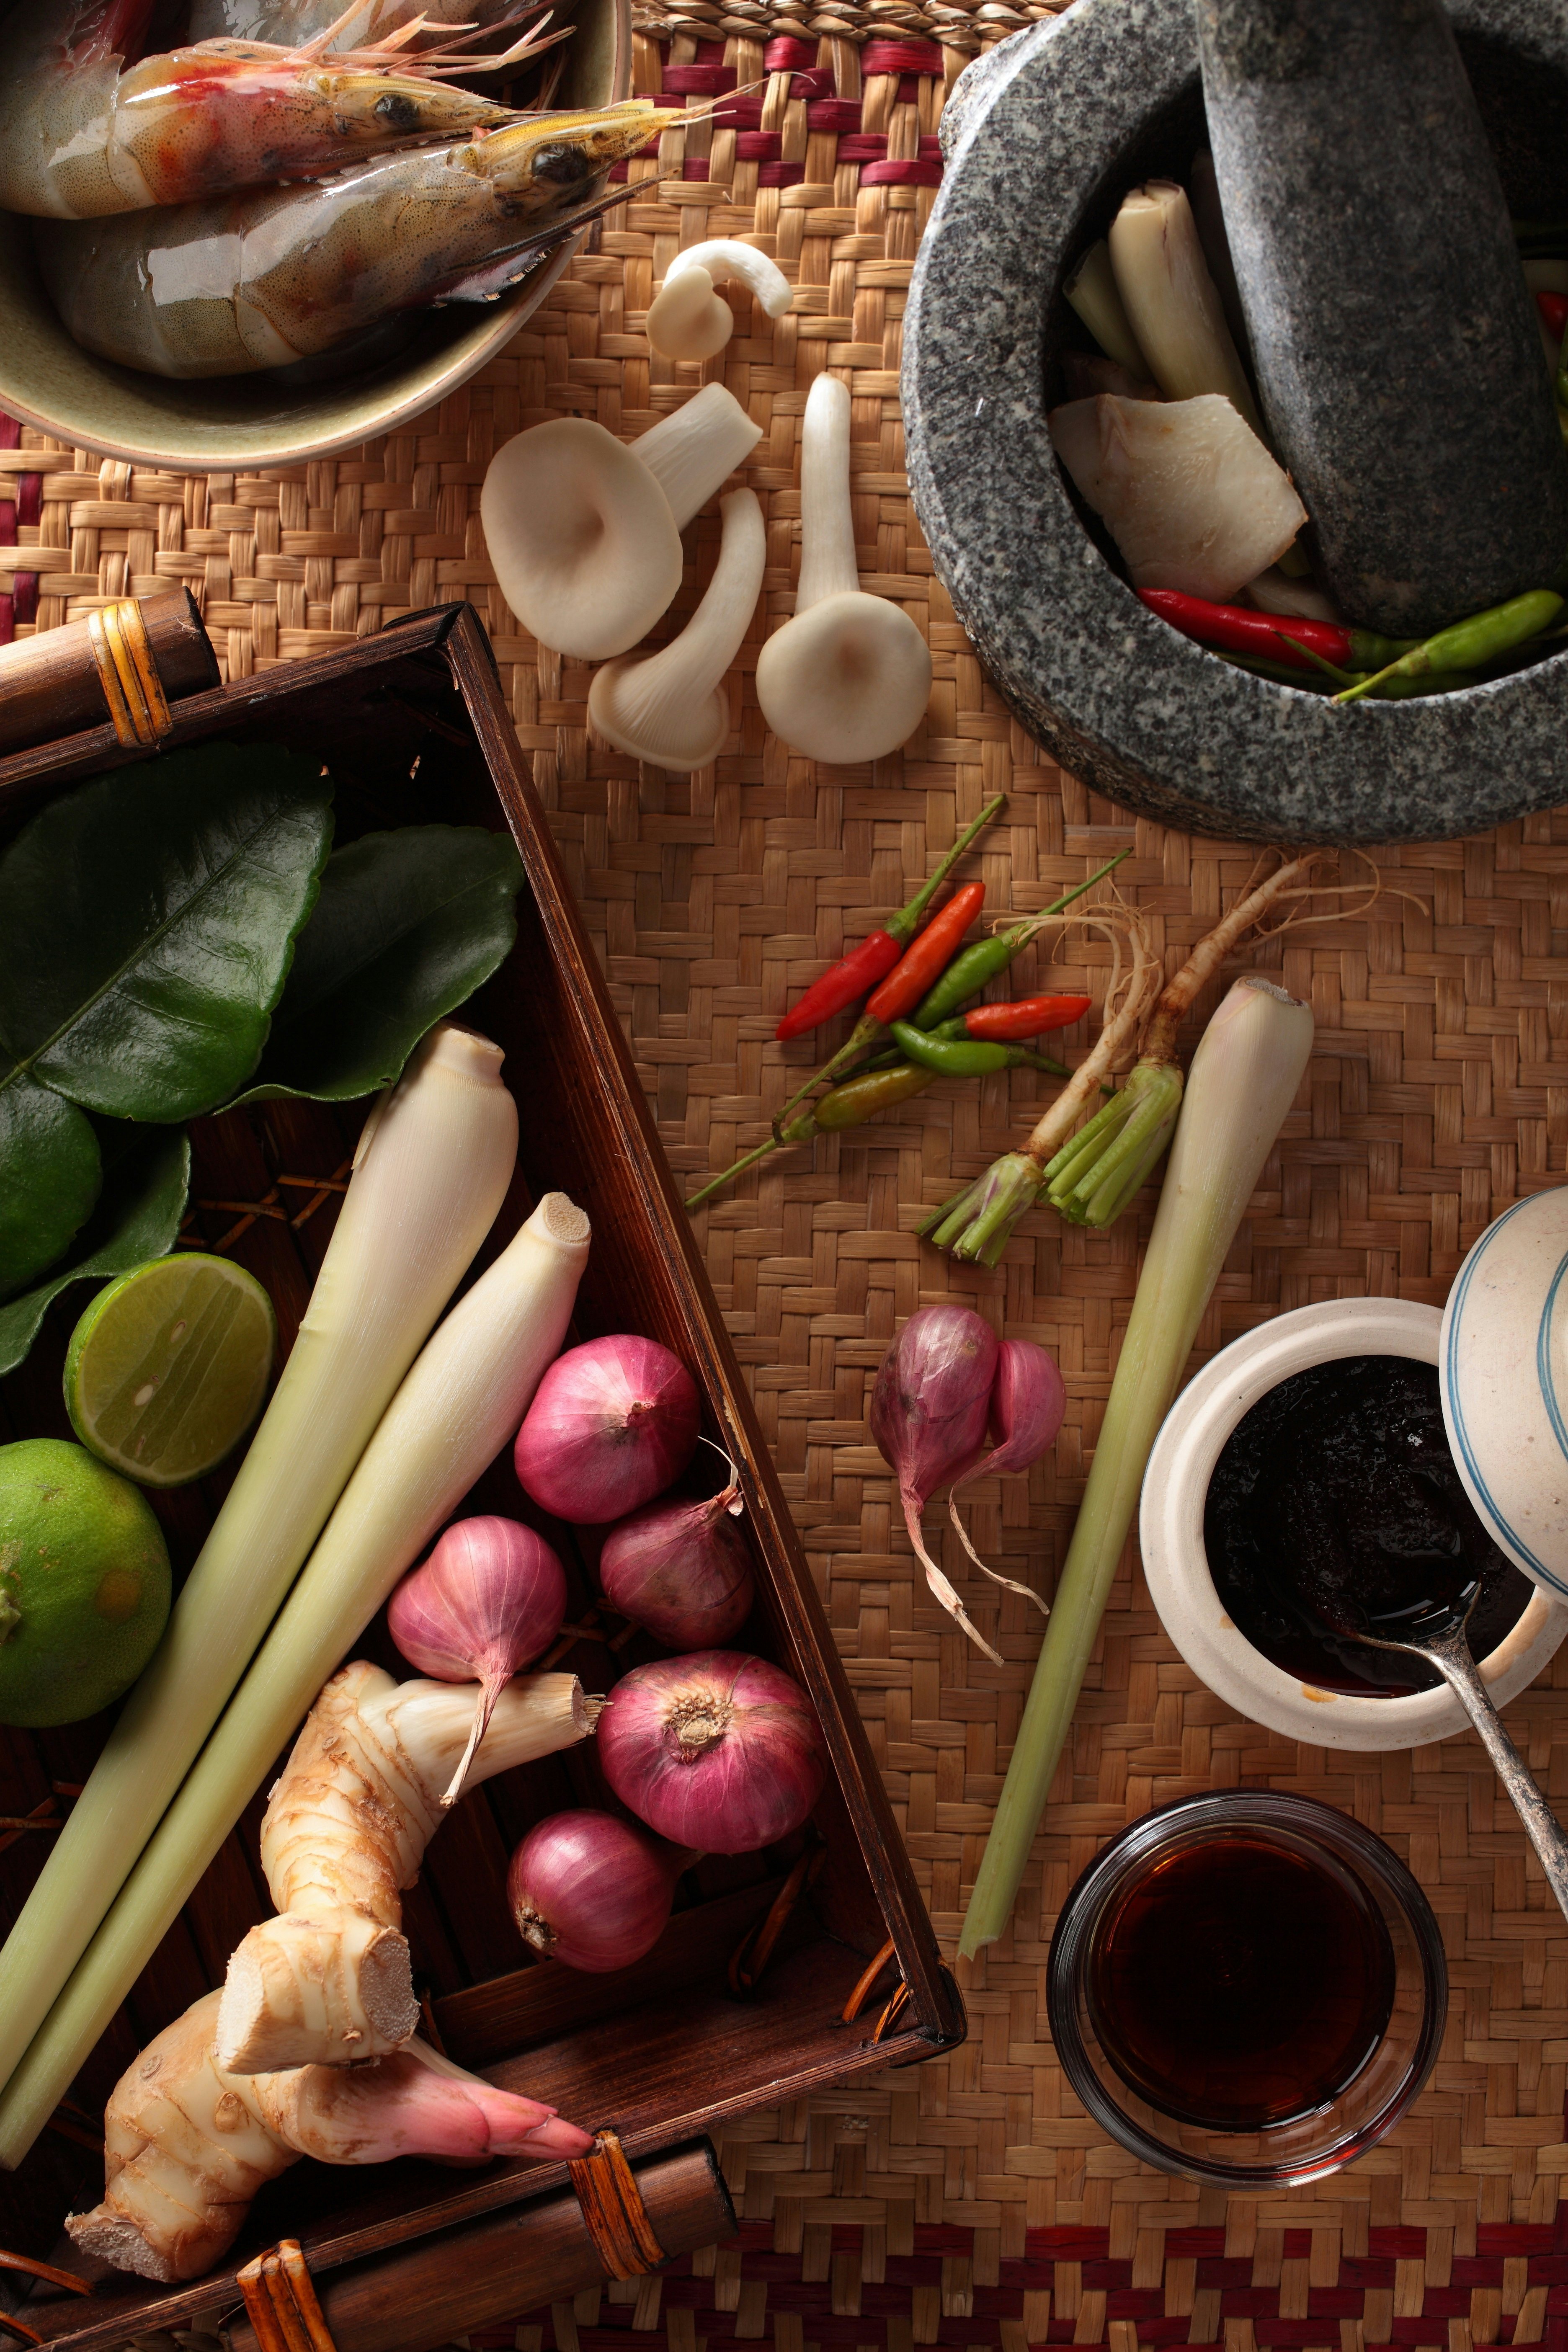 Regional Thai cooking classes are offered at the Grand Hyatt Bangkok: Image: Shutterstock